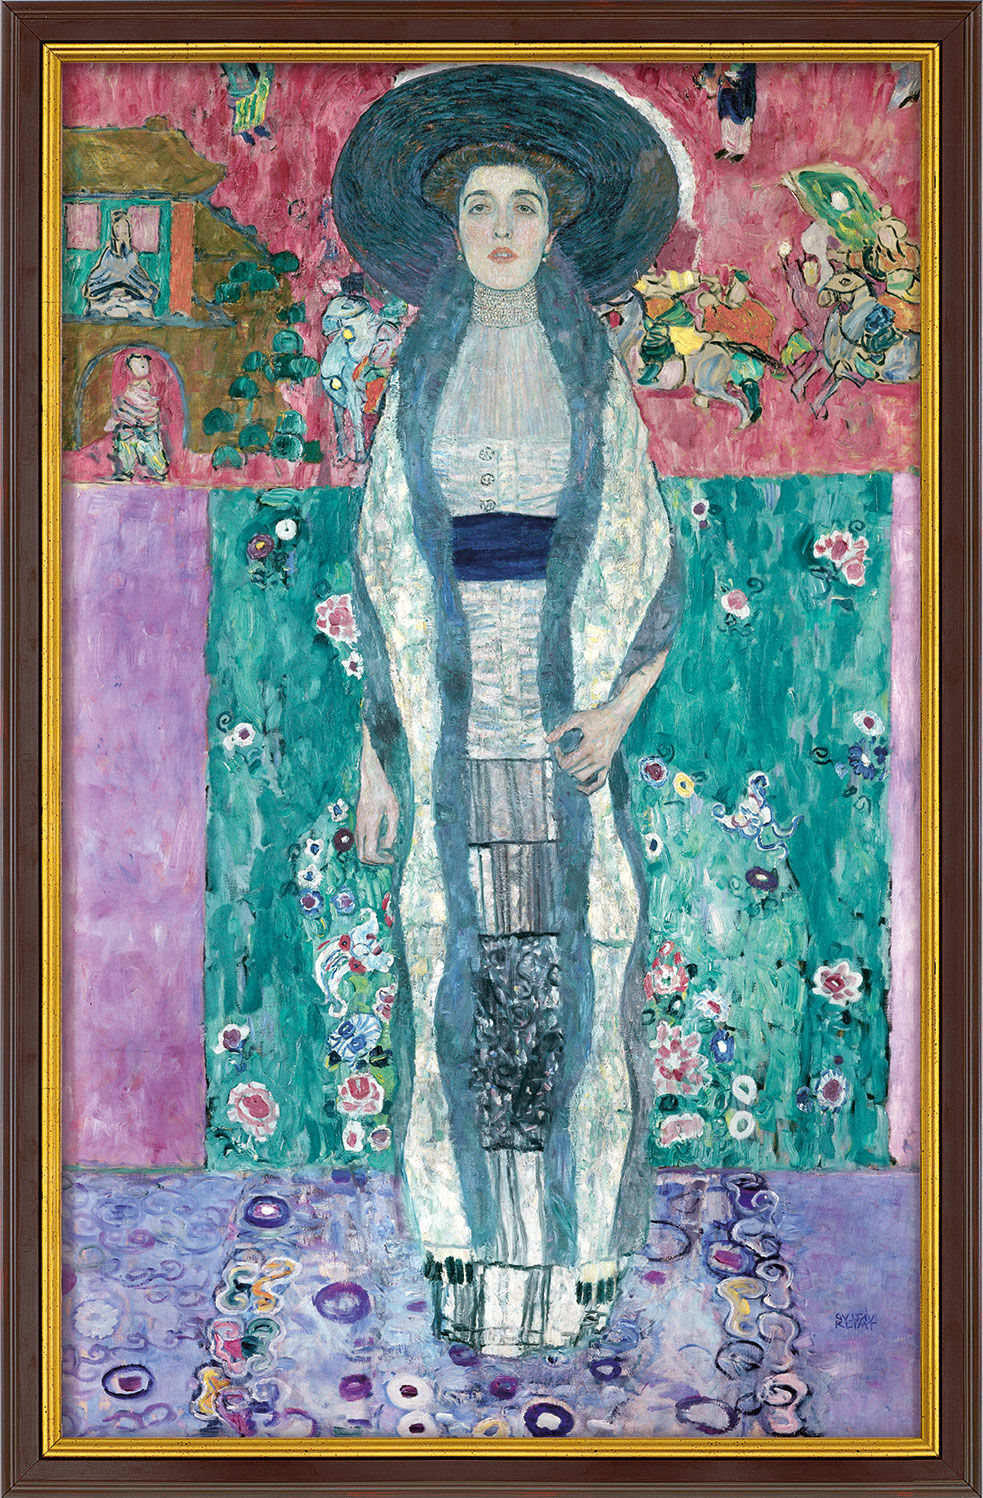 Picture "Portrait of Adele Bloch-Bauer II" (1912), framed by Gustav Klimt